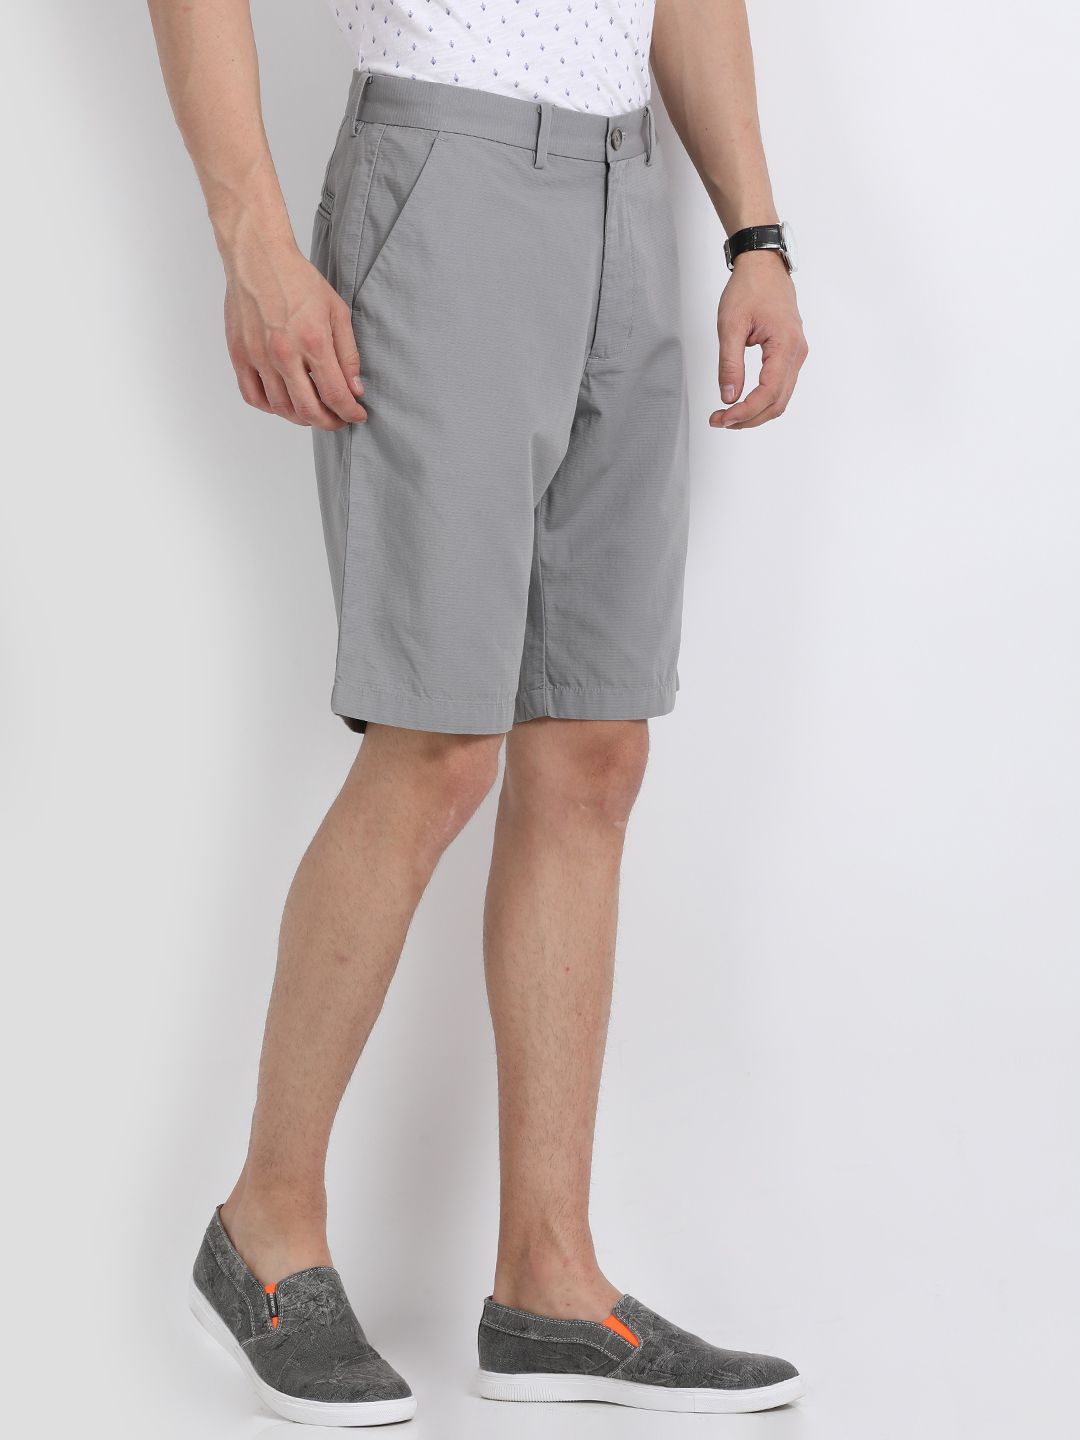 Indian Terrain Grey Shorts - Buy Indian Terrain Grey Shorts Online at ...